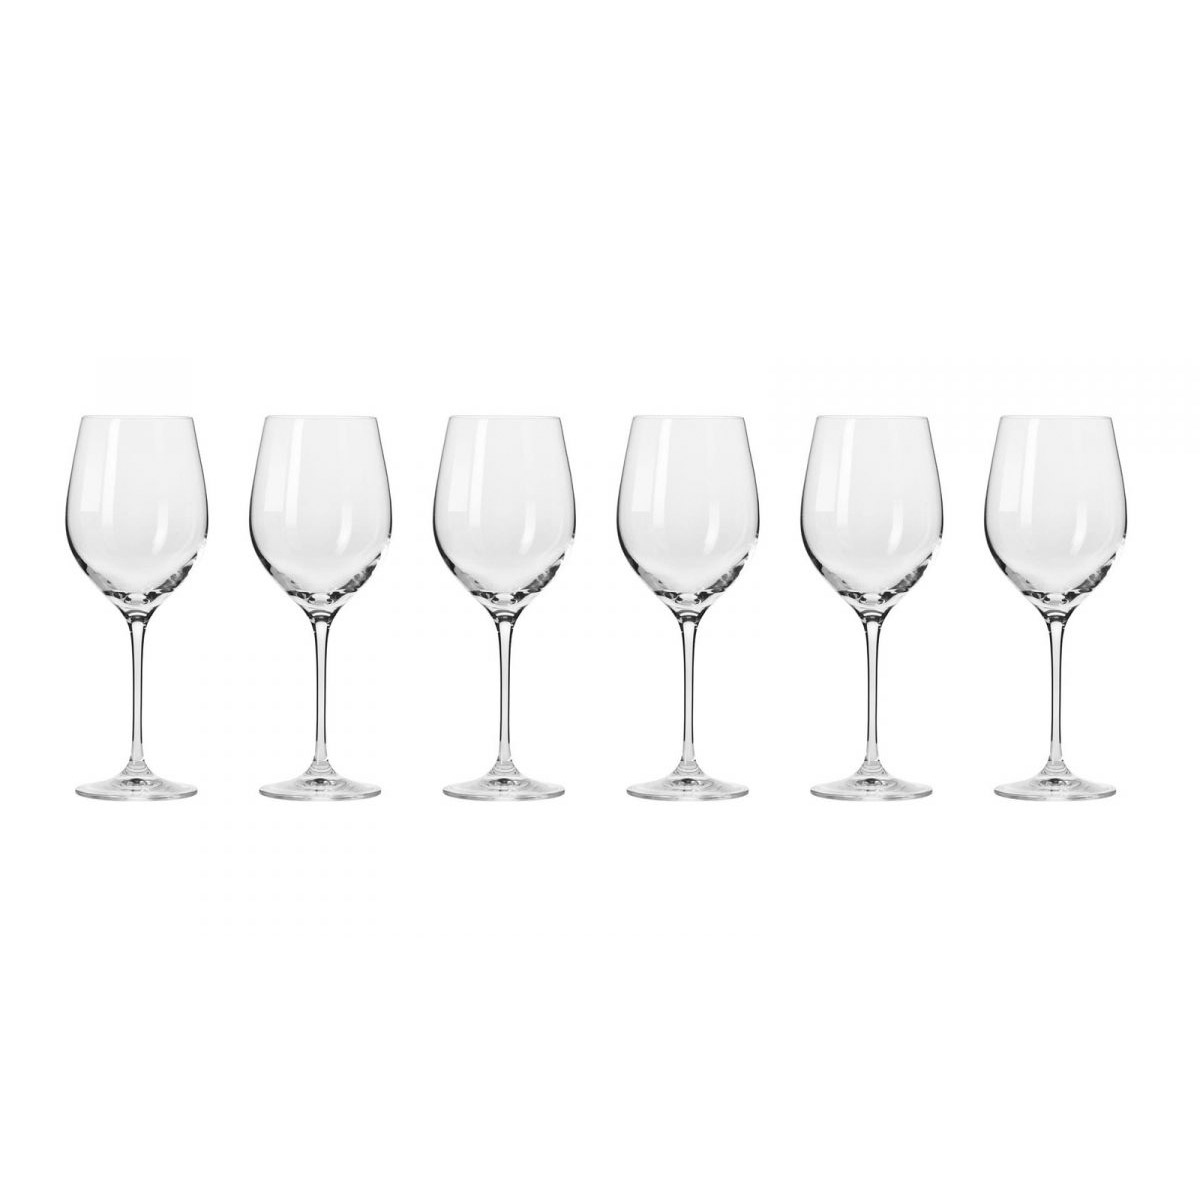 Набор бокалов Krosno Гармония для красного вина 0,37 л набор krosno гармония для красного вина 1 1 6л 2 0 45 л